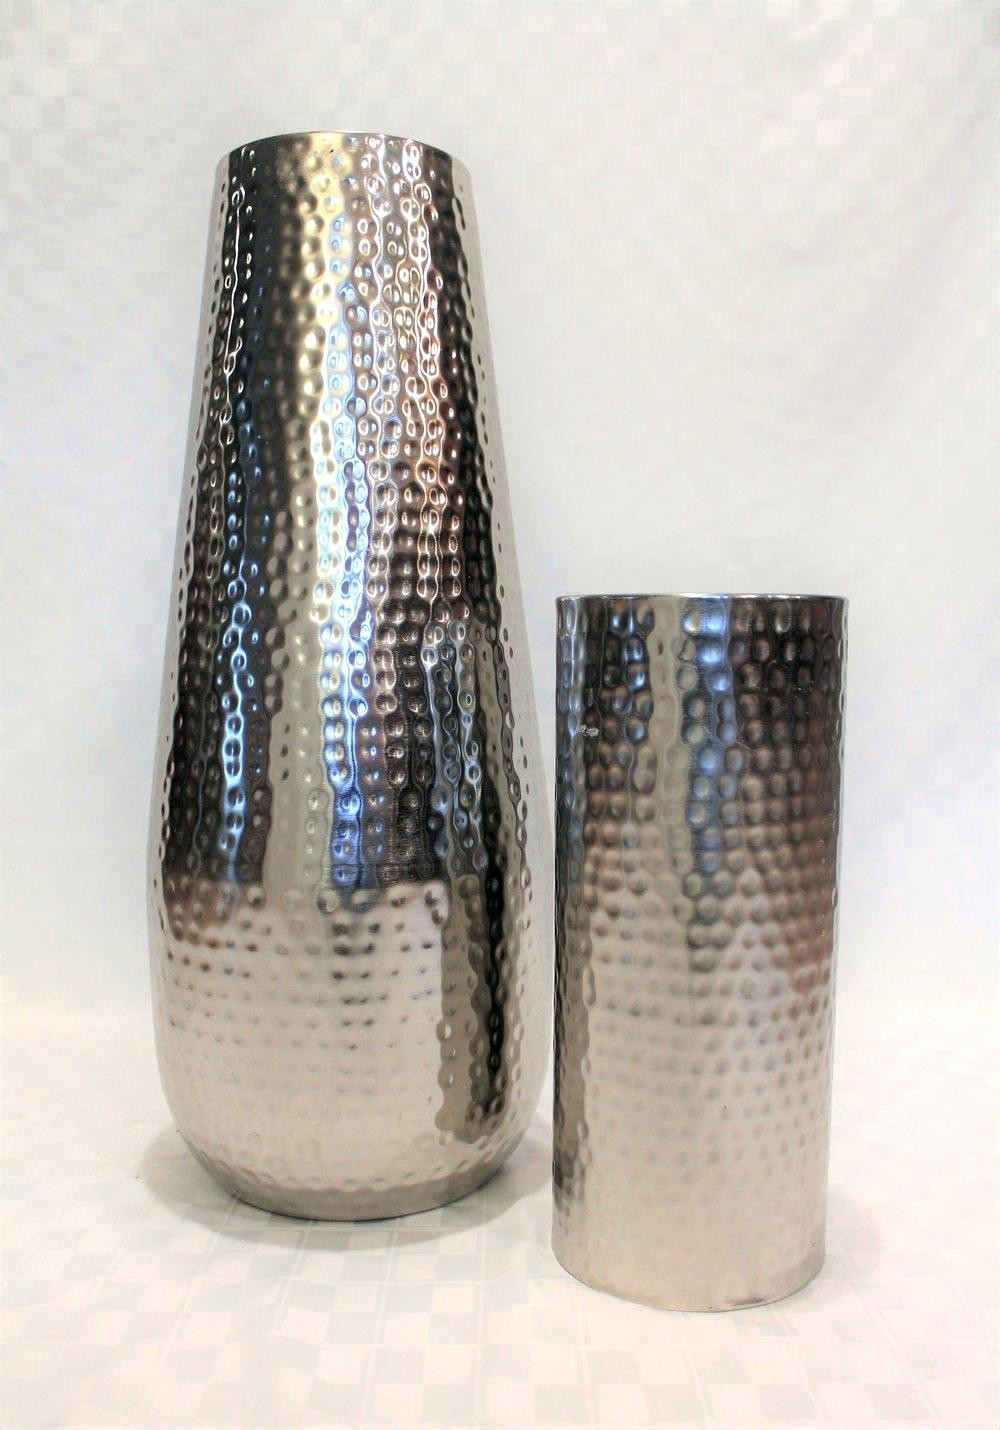 20 glass vases wholesale of silver vases wholesale pandoraocharms us throughout silver vases wholesale glass bulk tall flower fl org